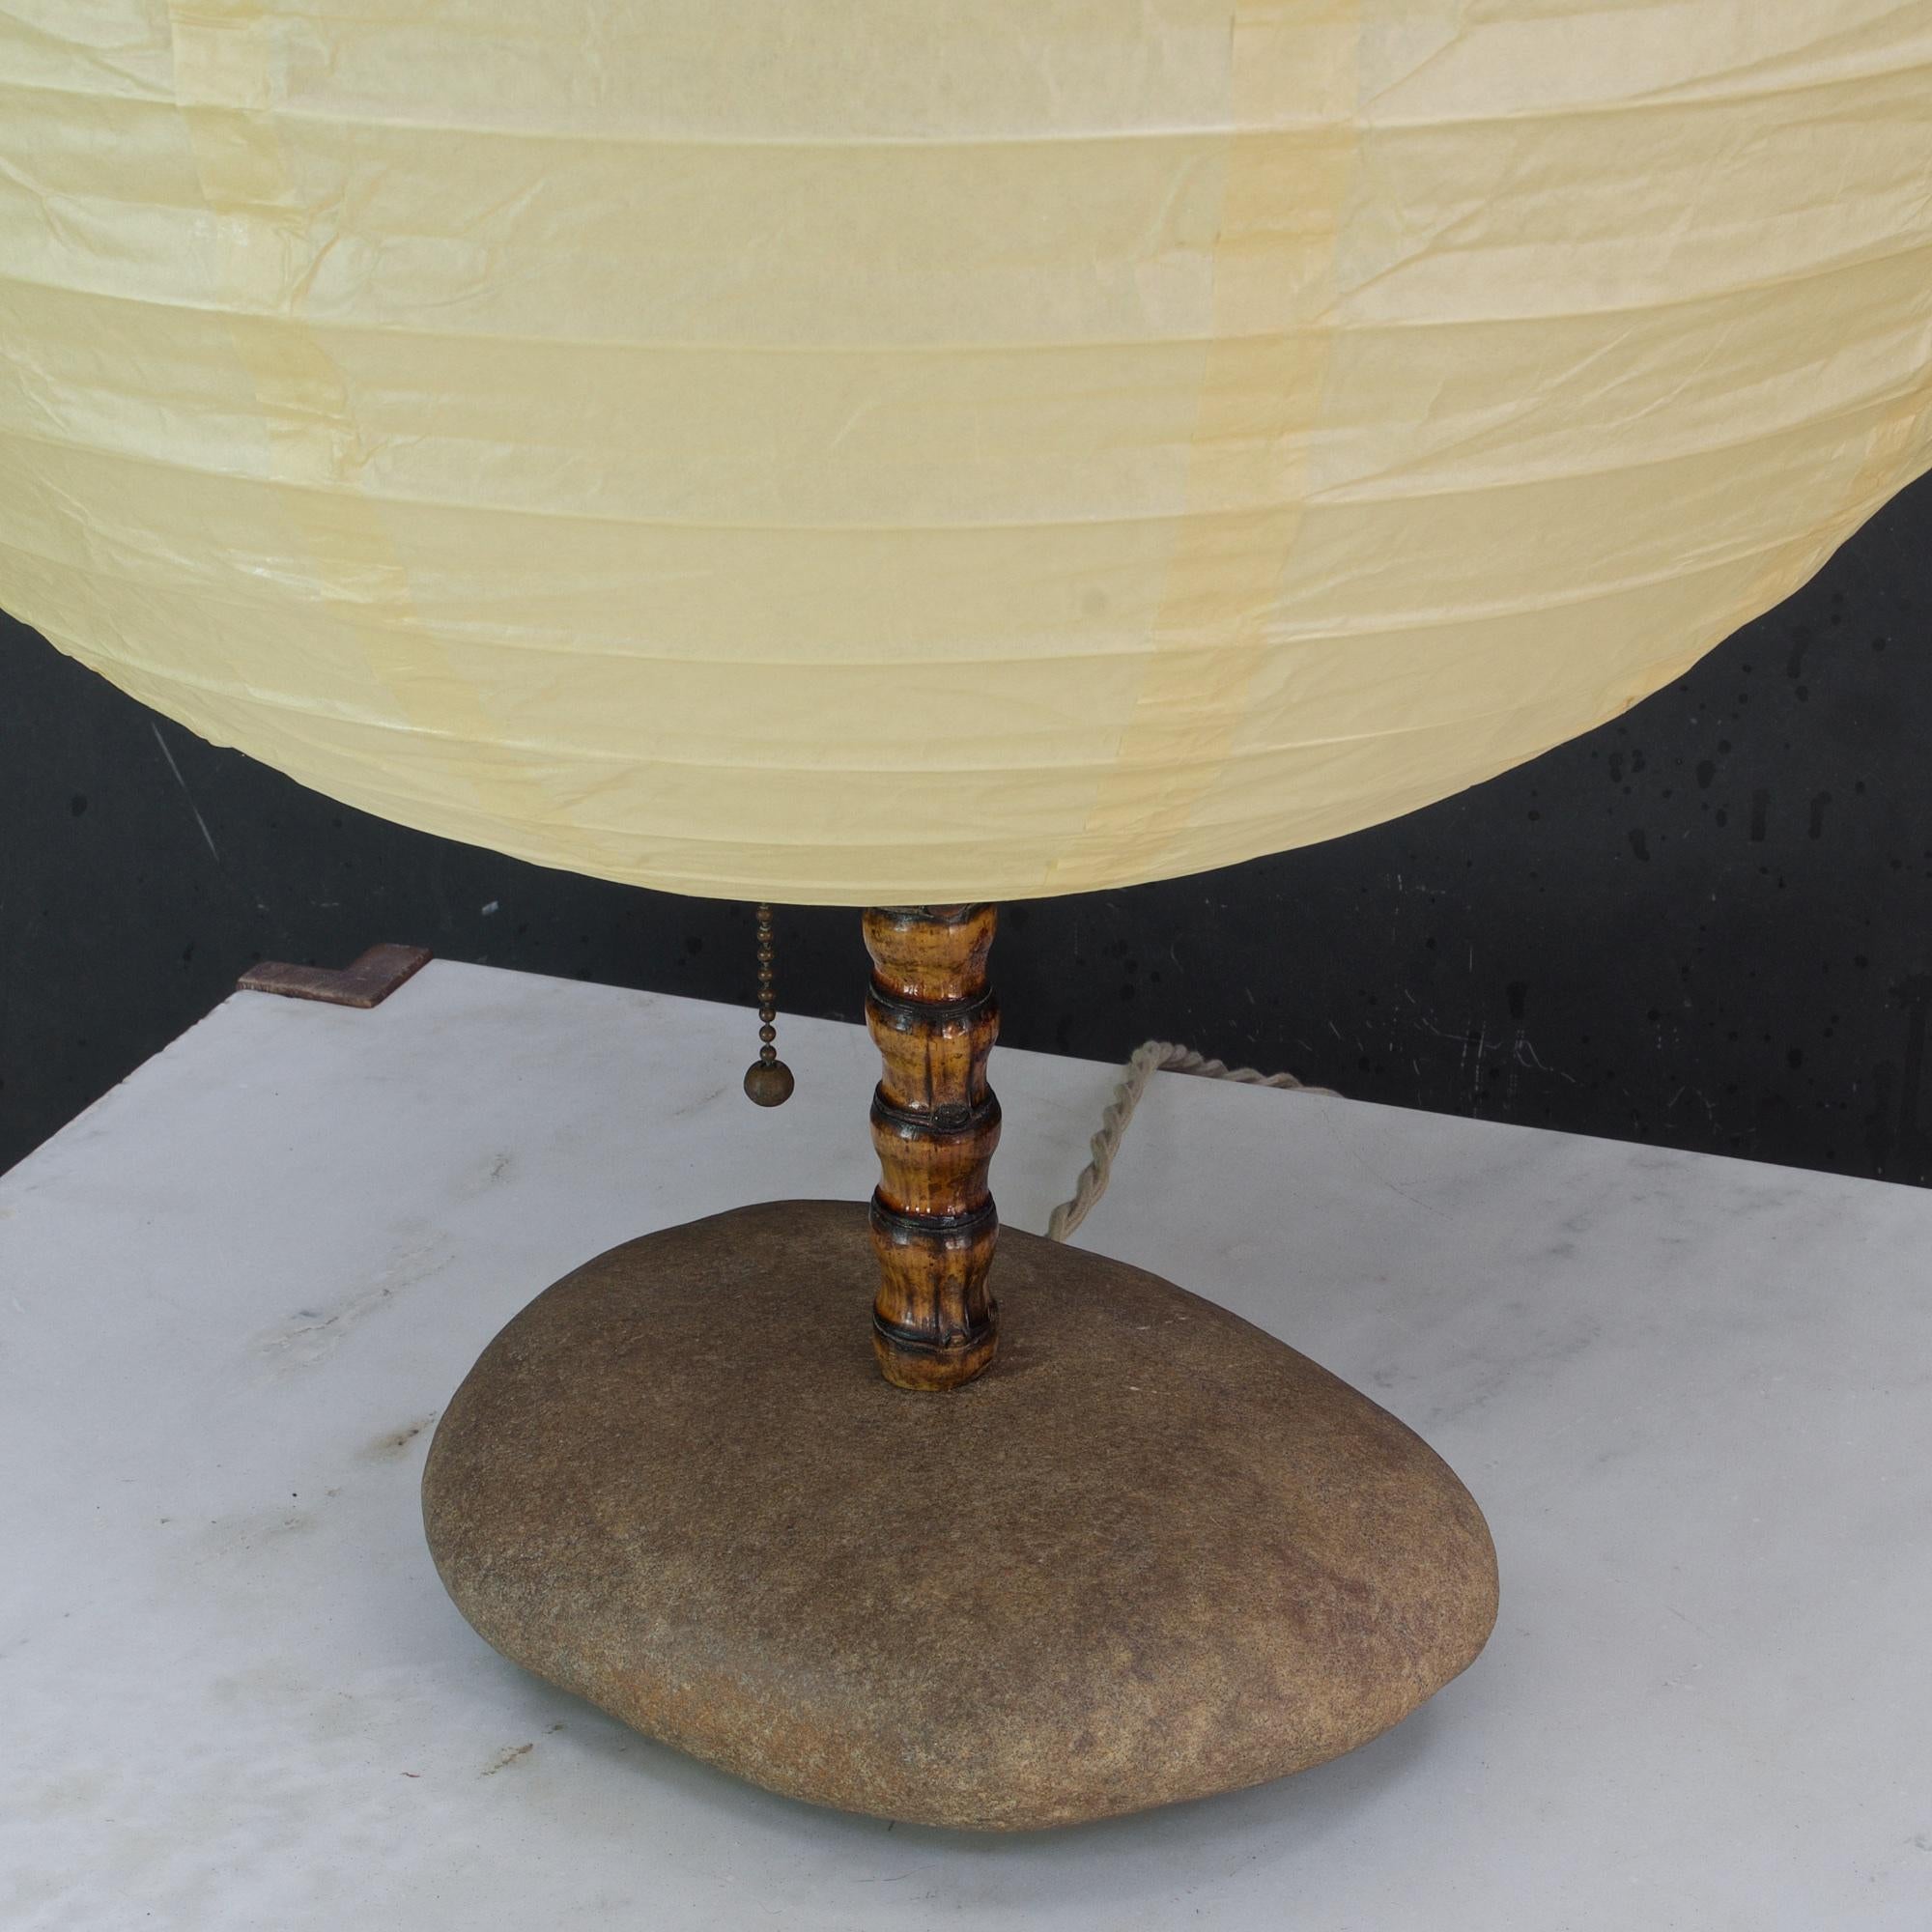 American Neoprimitive River Stone Table Lamp Inspired by Isamu Noguchi Akari Lights